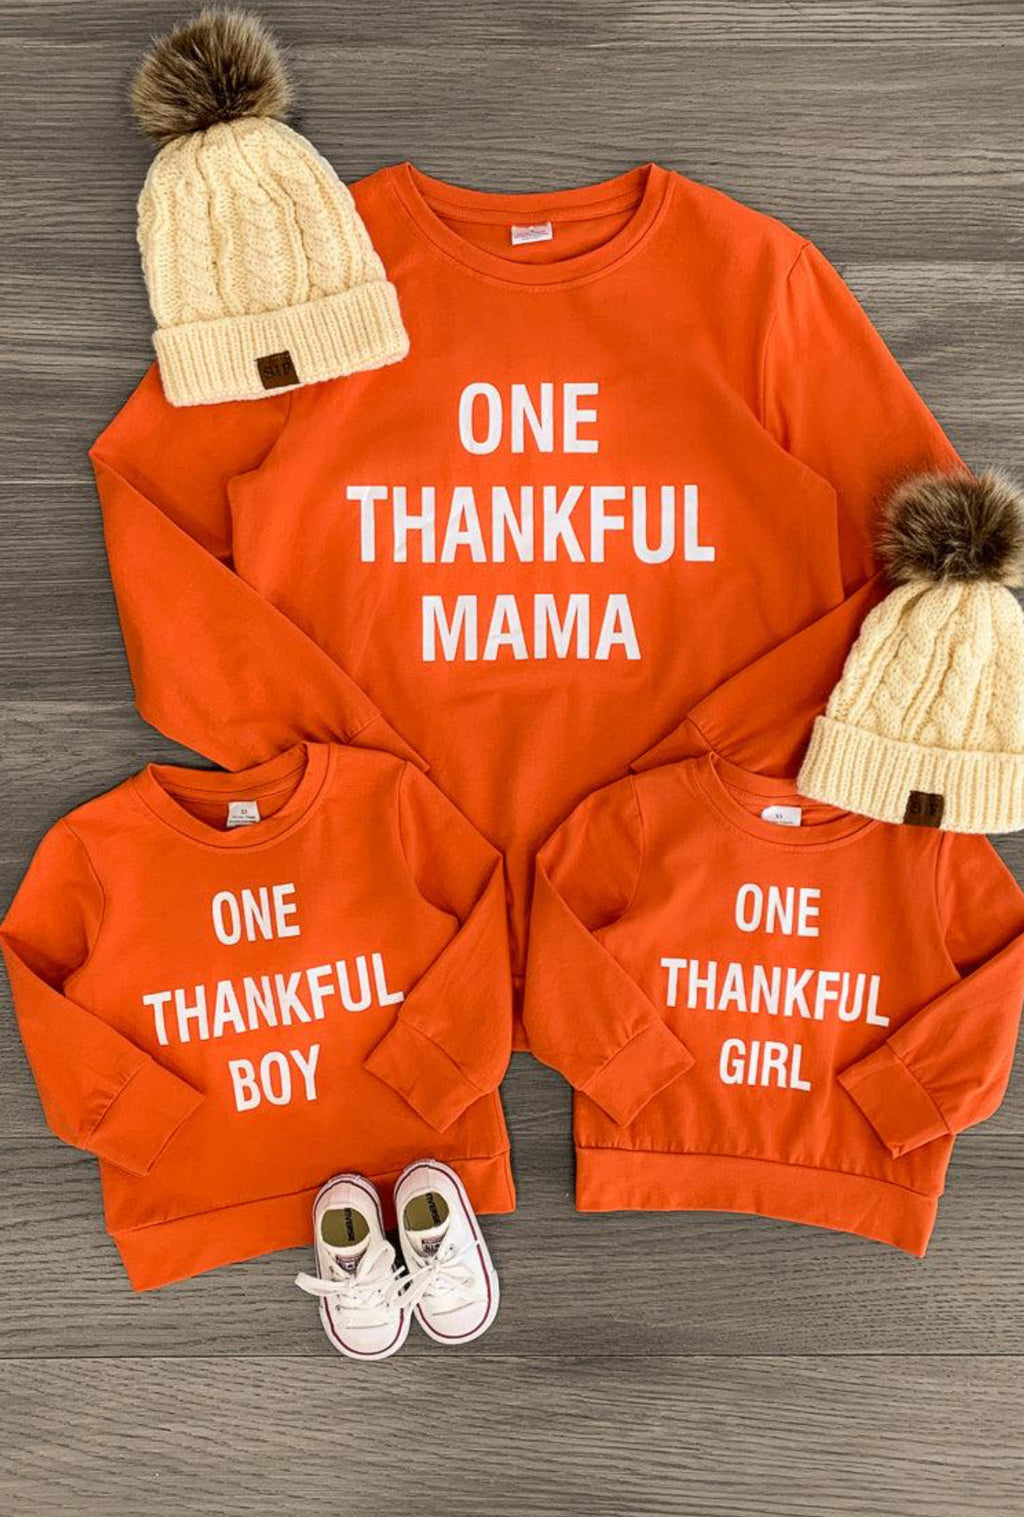 Mom & Kid - "One Thankful Mama, Girl, Boy" Top